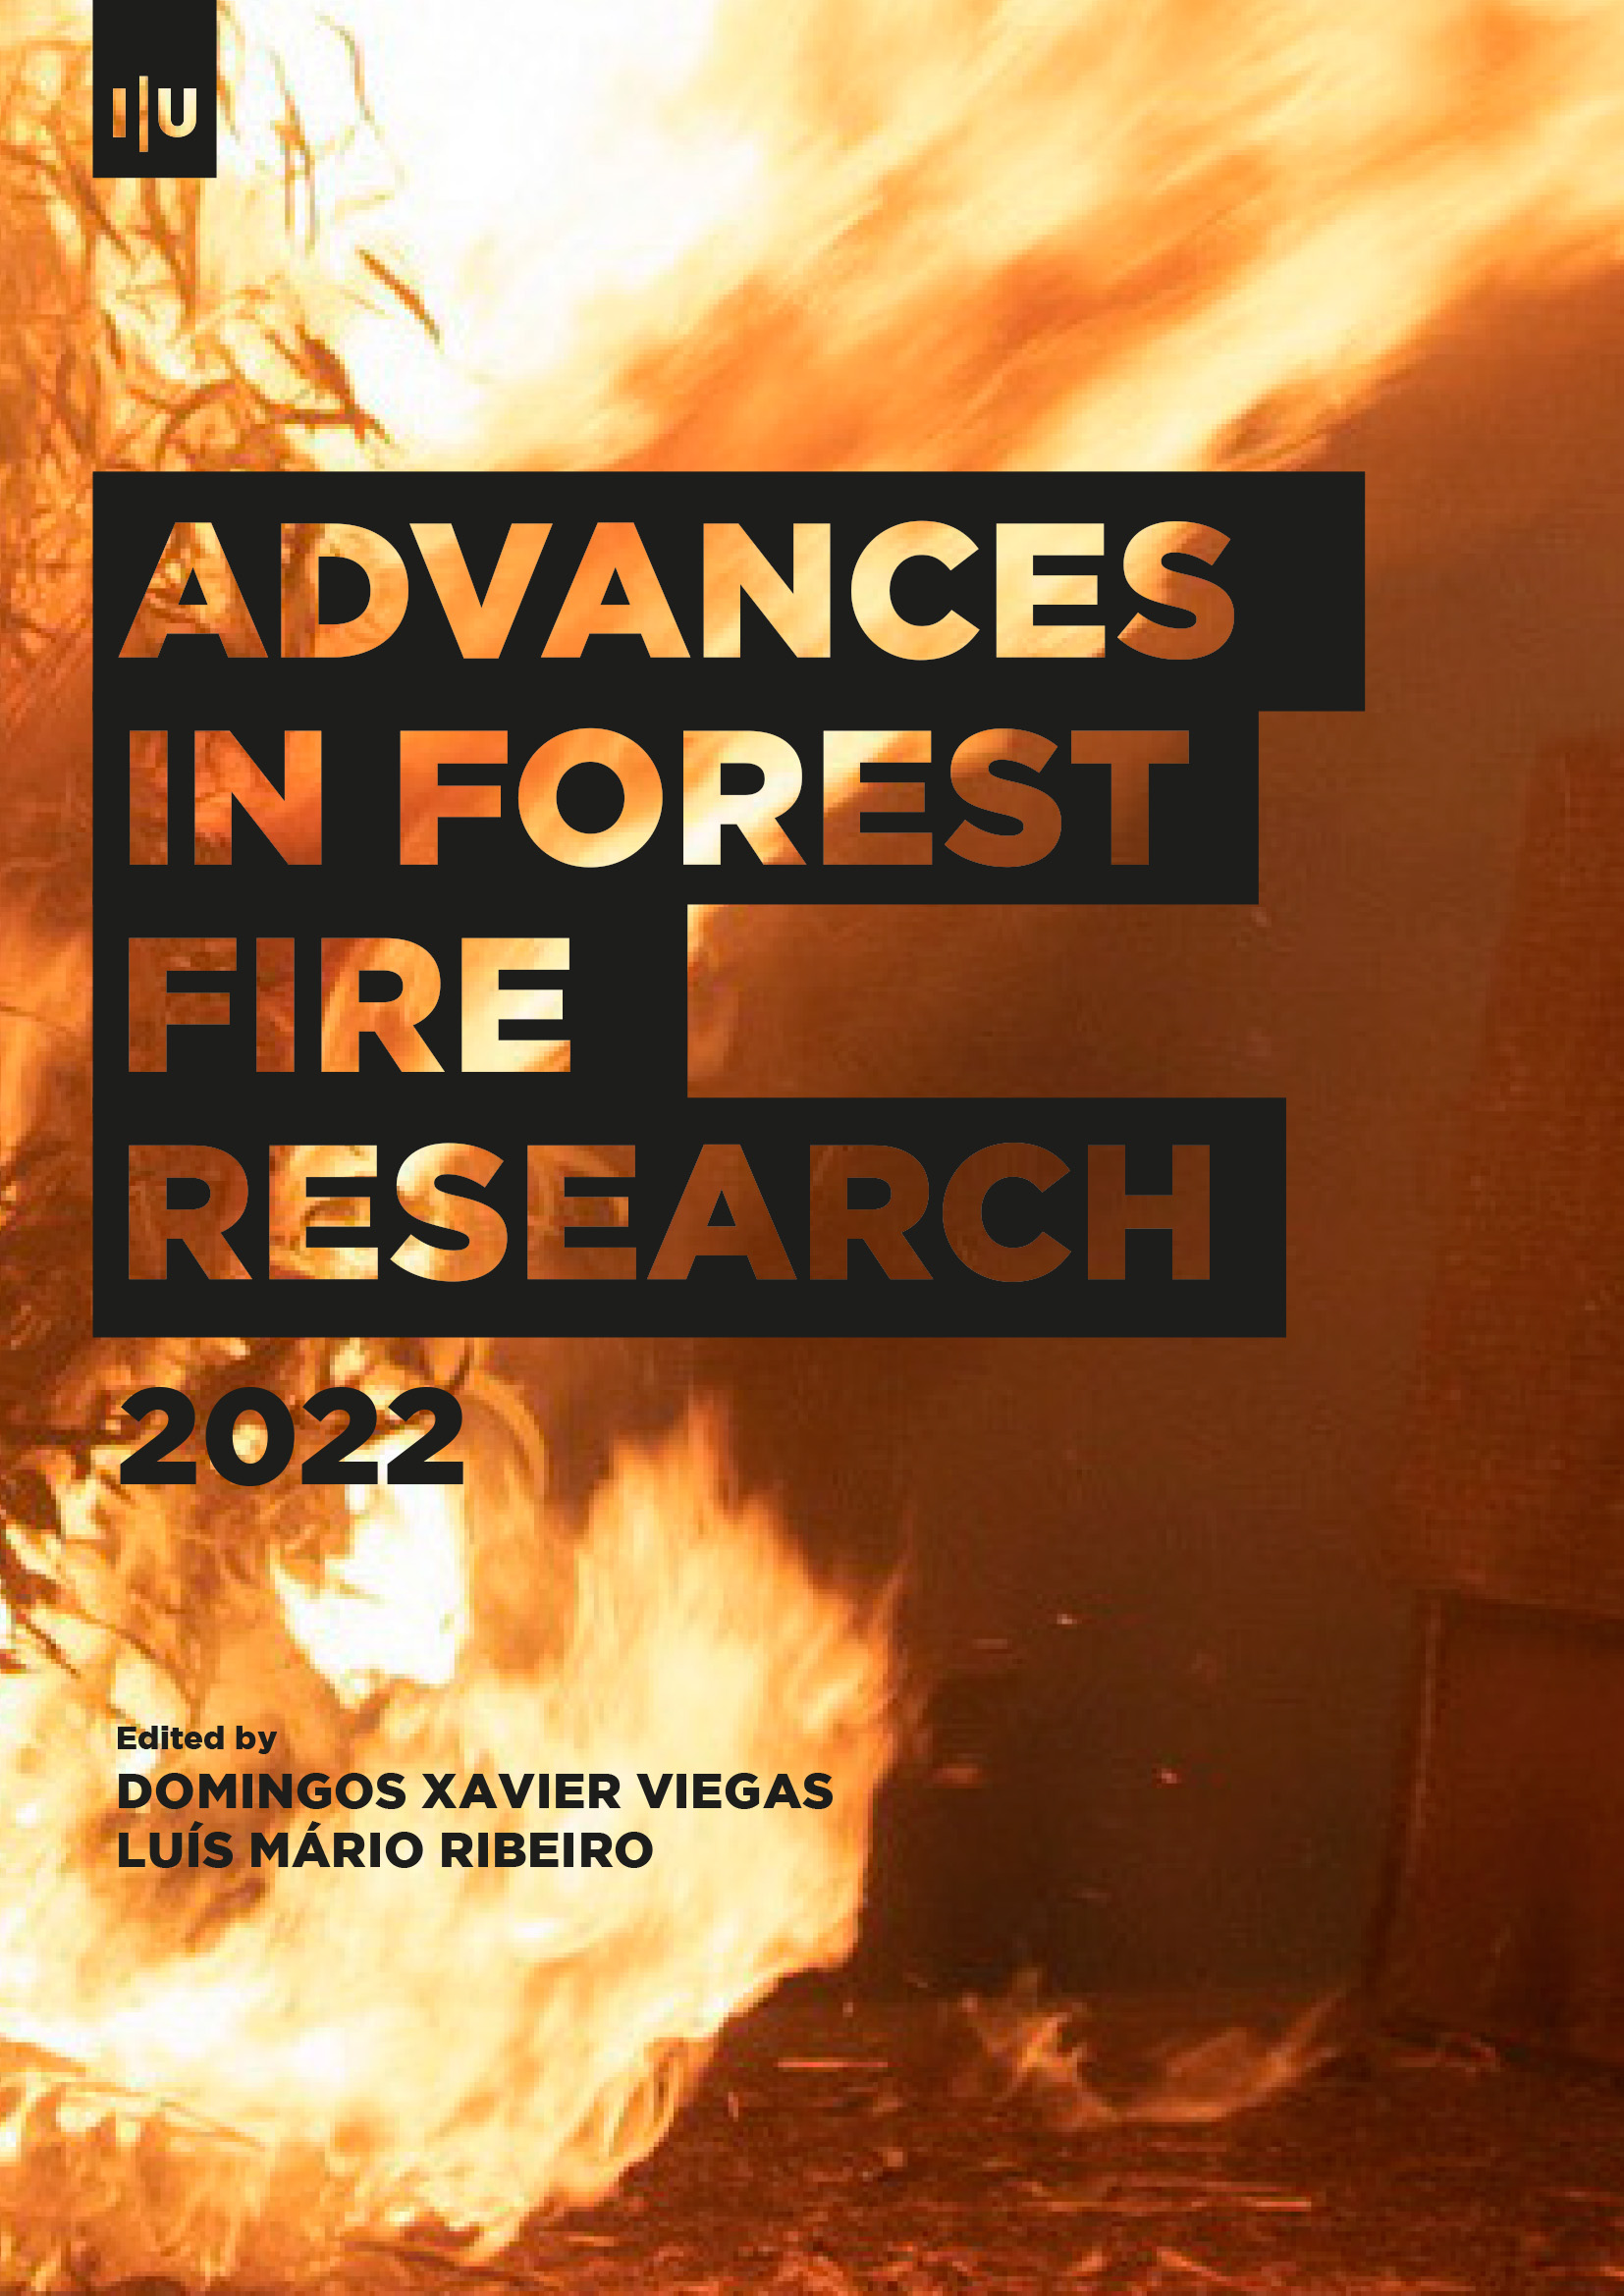 Advances in Forest Fire Research 2022 - Imprensa da Universidade de Coimbra (IUC)